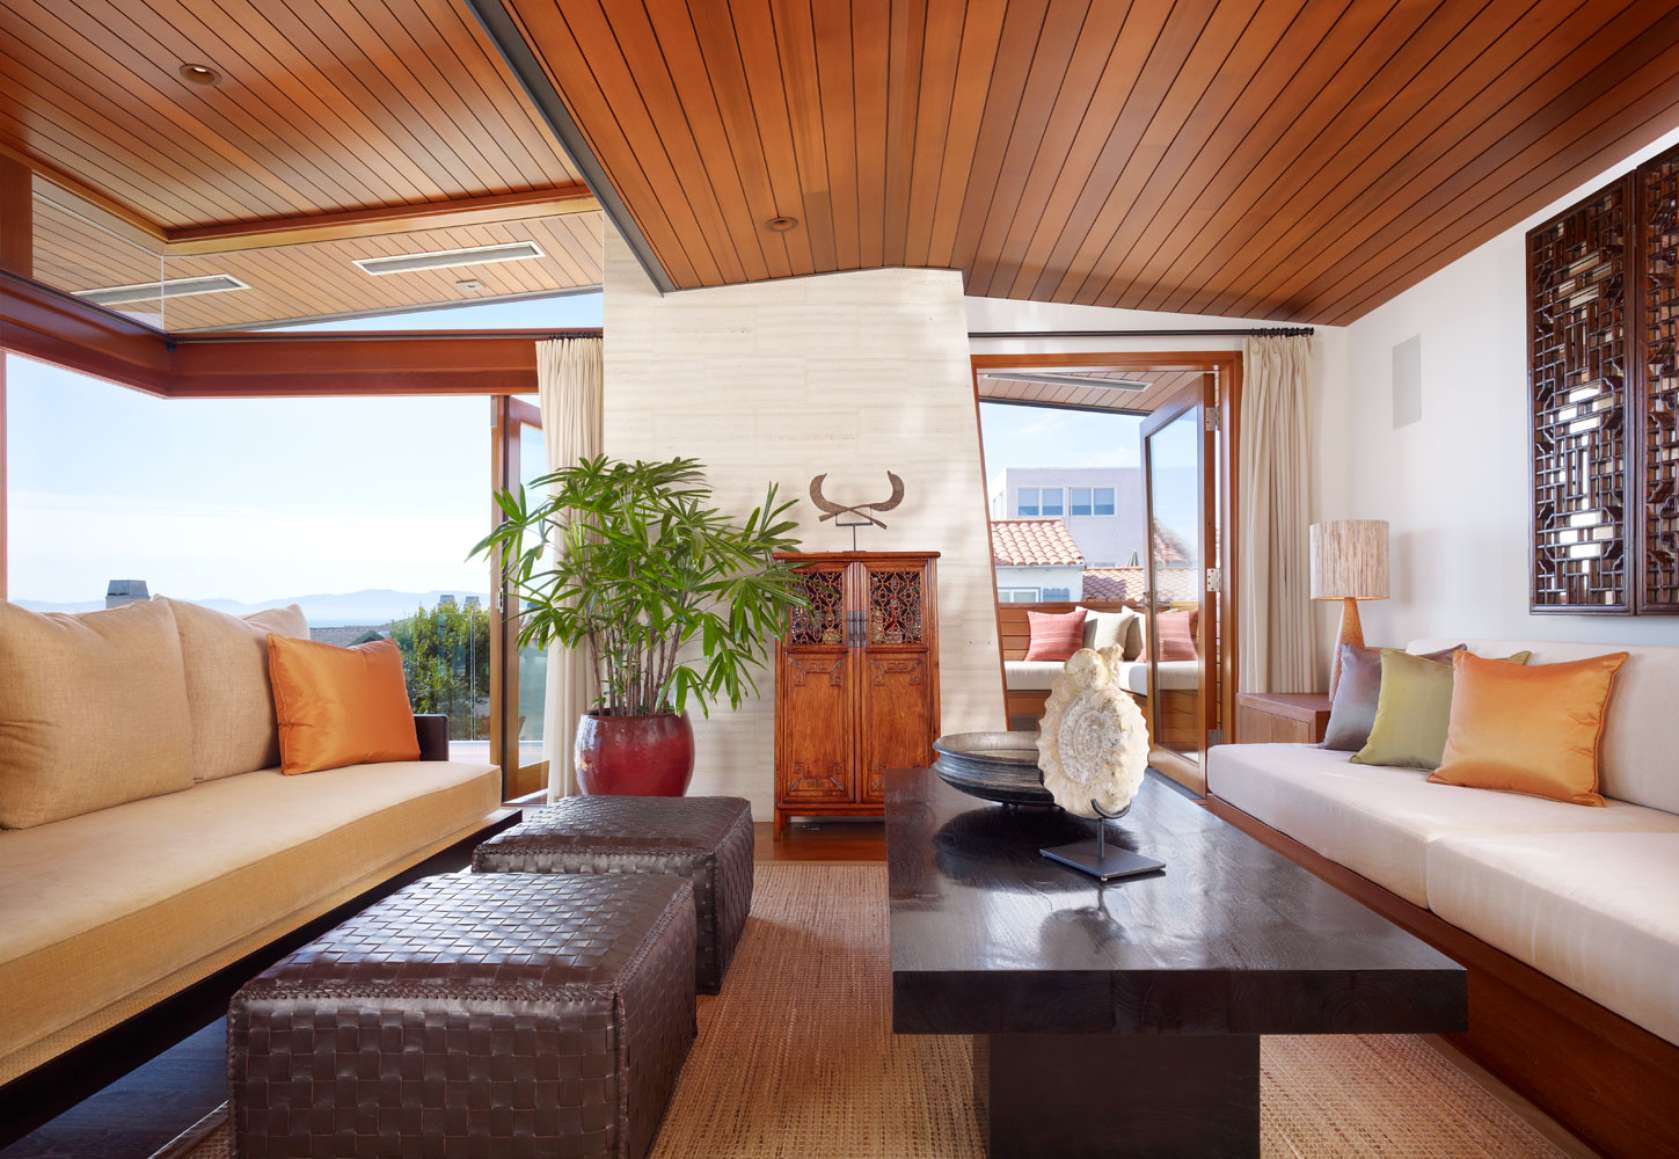 Top 15 Best Wooden Ceiling Design Ideas Small Design Ideas